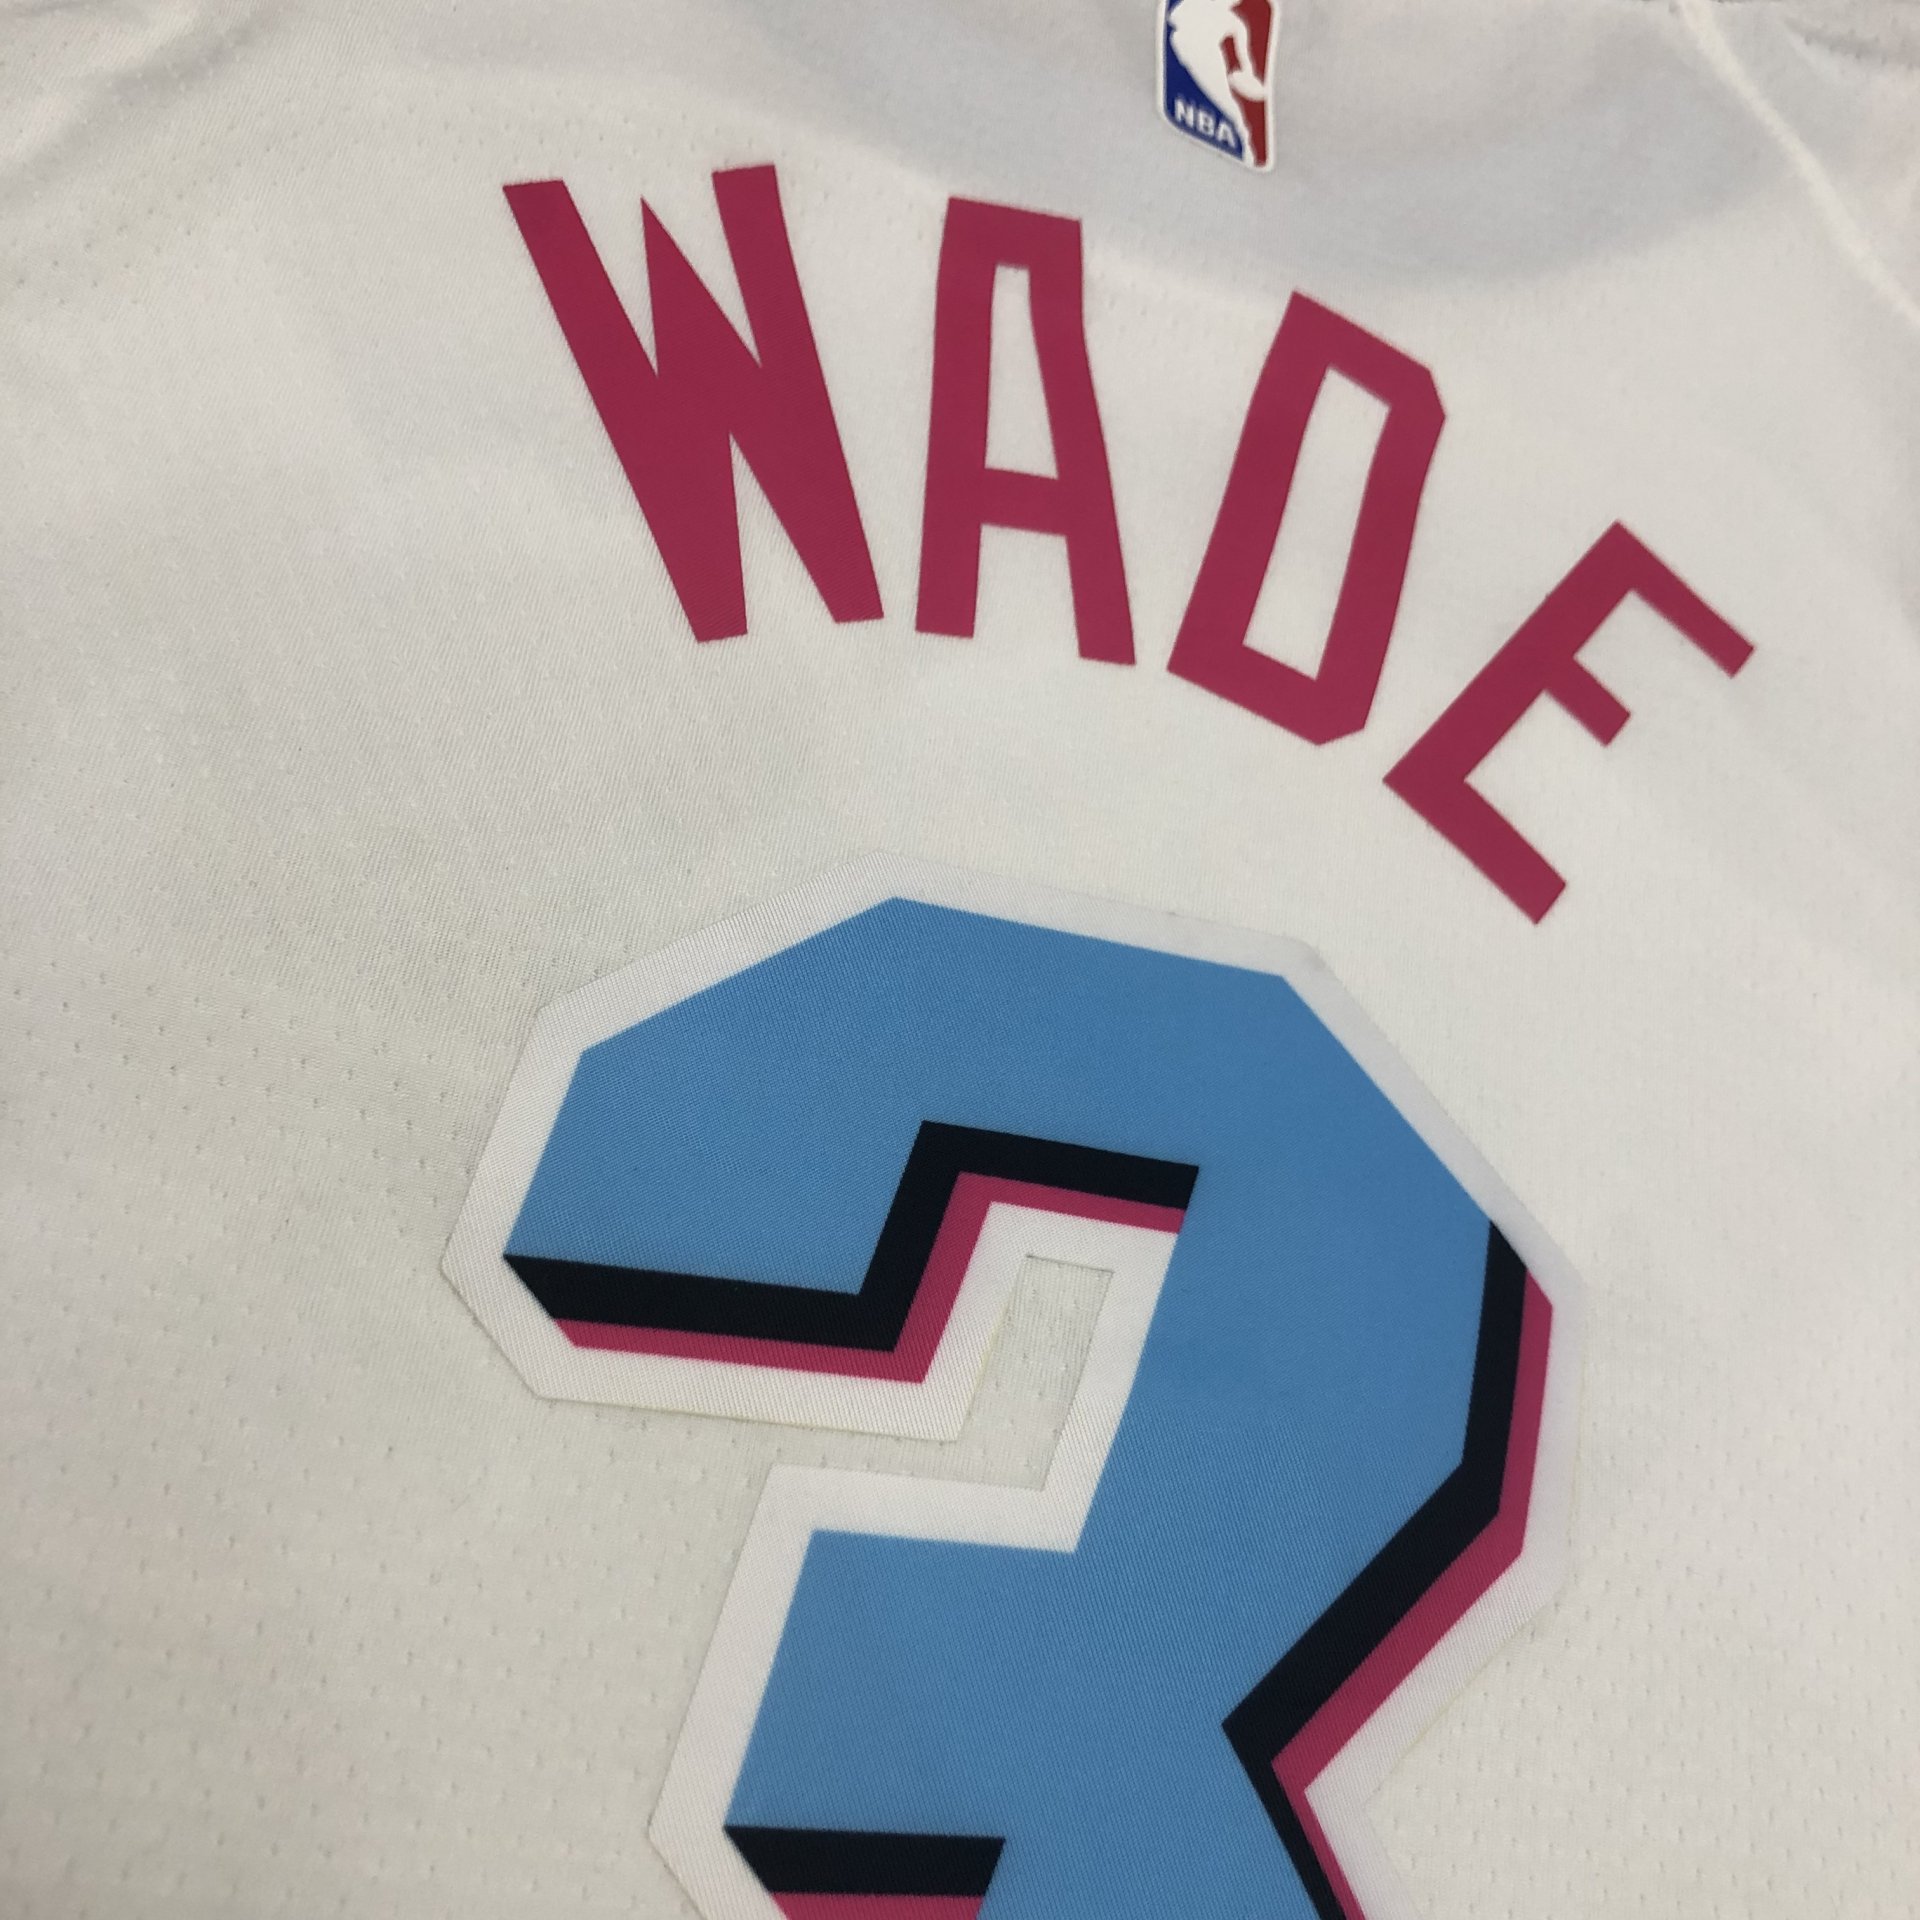 NBA Miami Heat Dwayne Wade White Replica Jersey, Large 